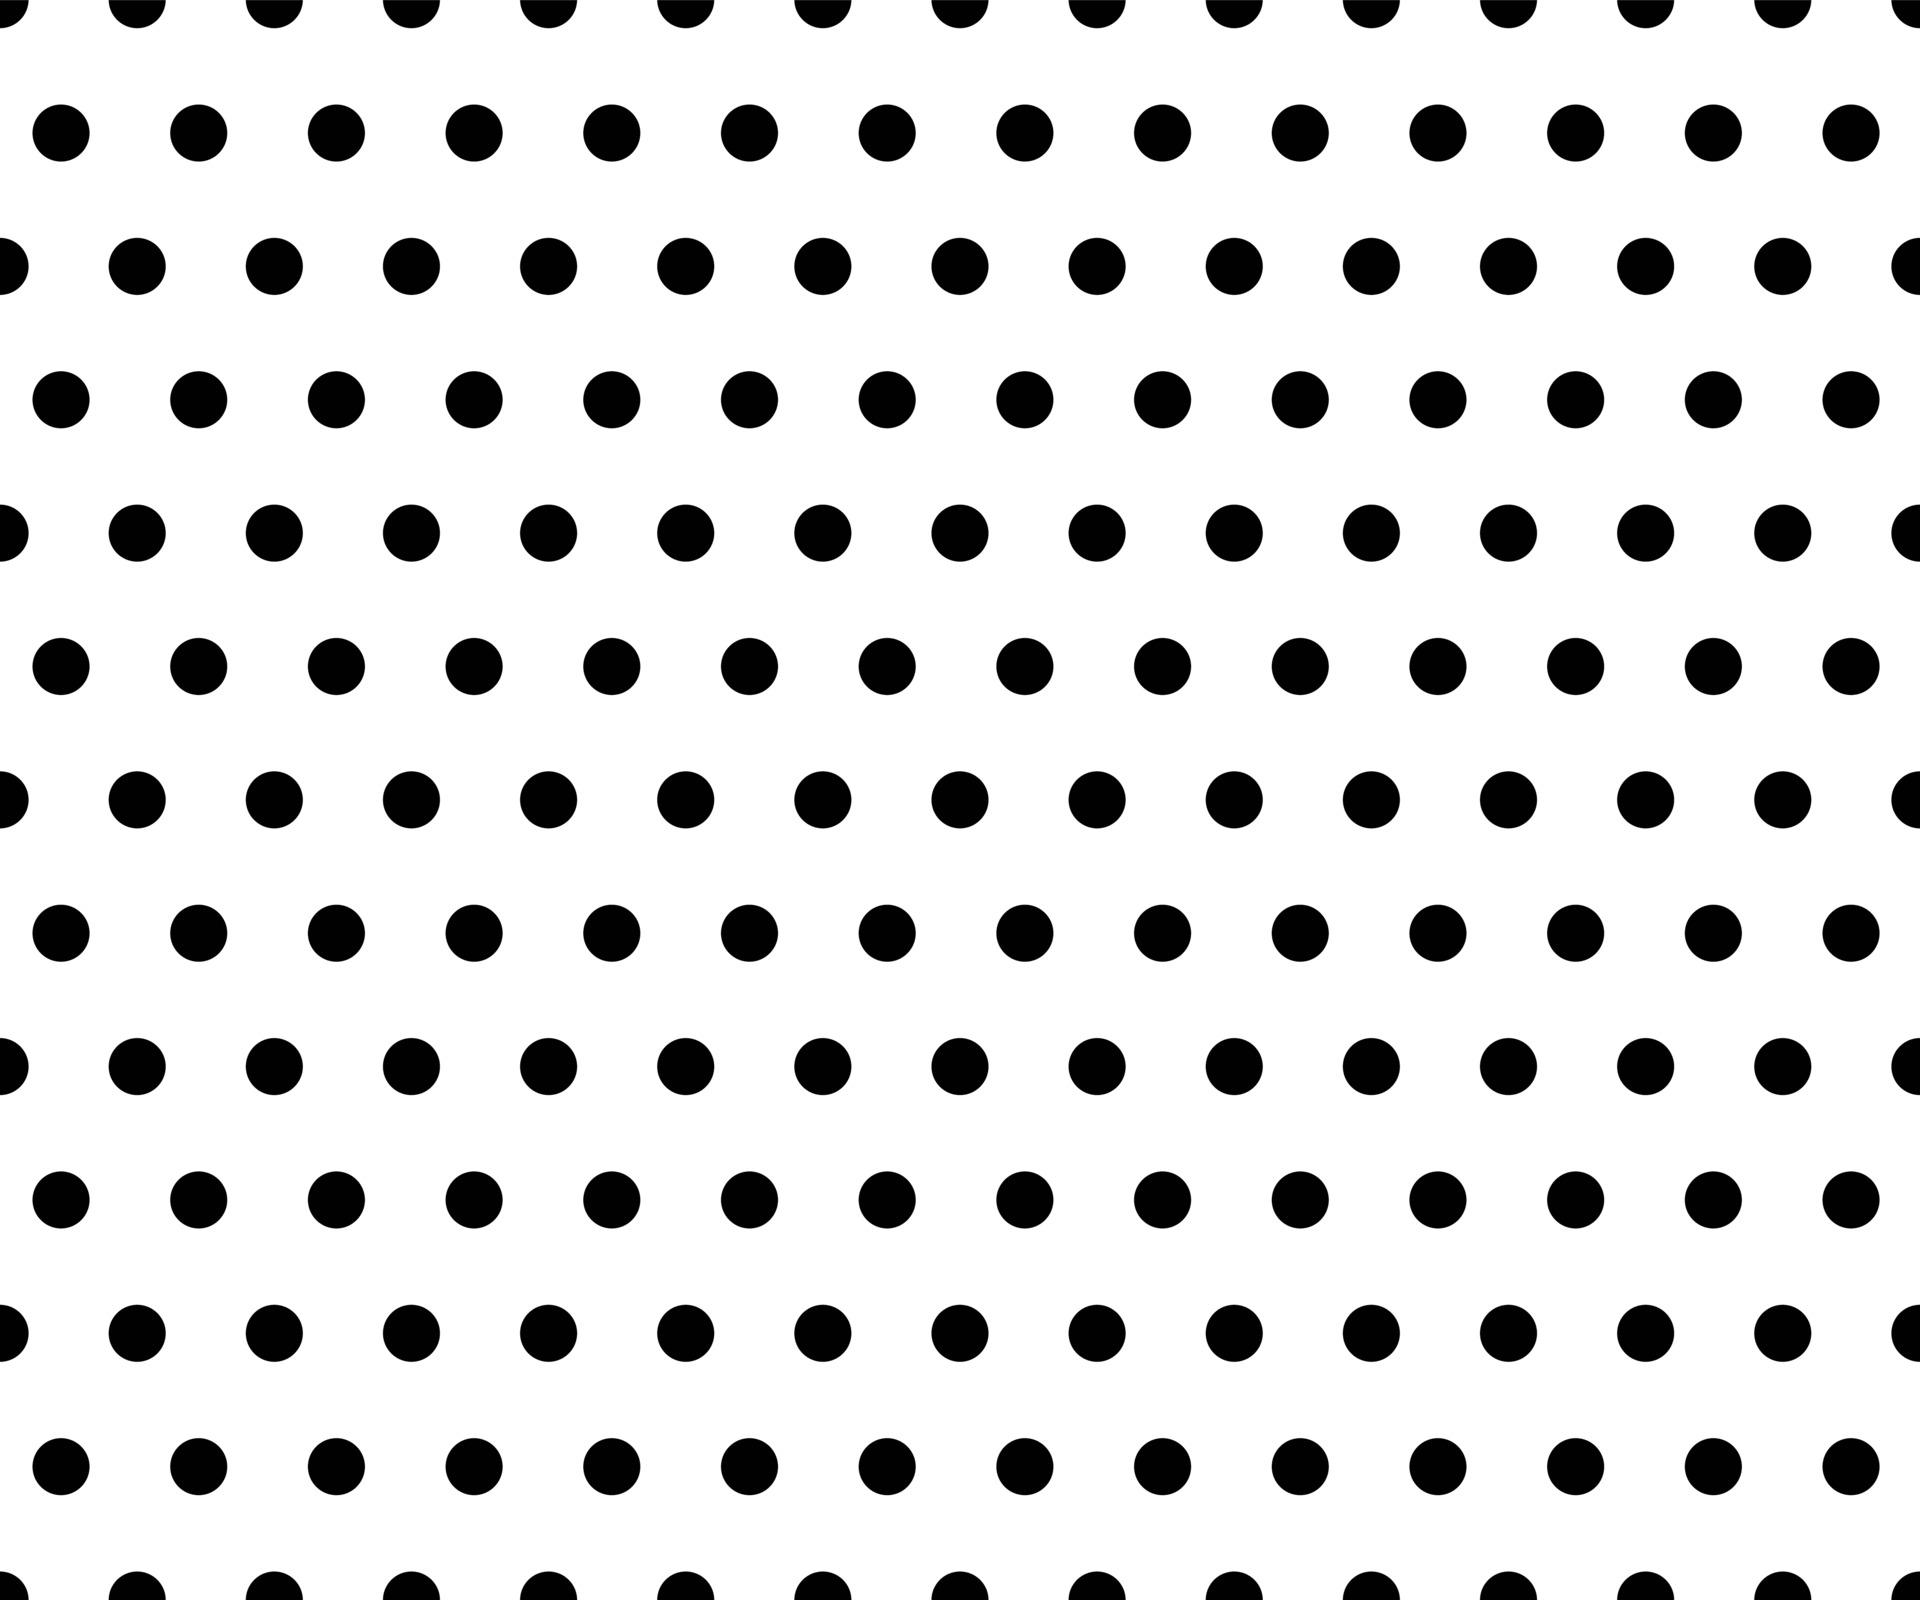 7. Polka Dot Black and White Nail Design - wide 7